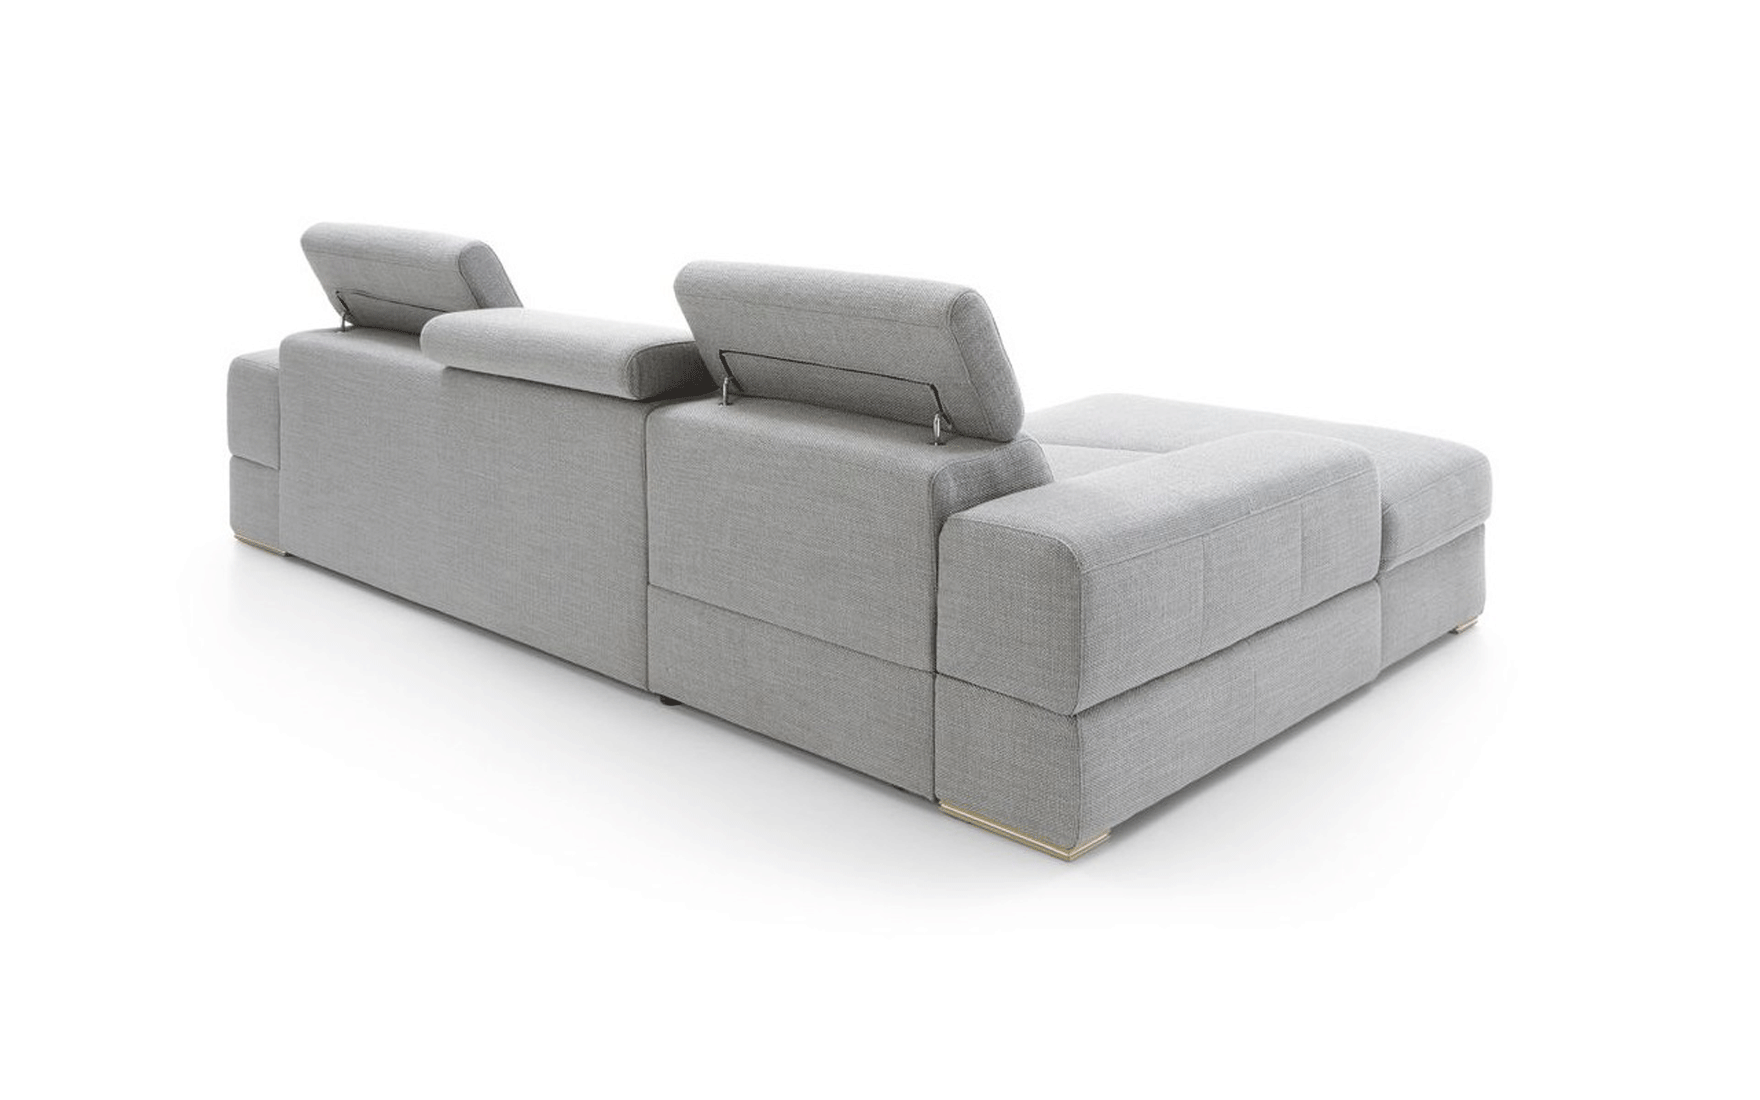 Fabric Contemporary Sectional Sofa - Click Image to Close